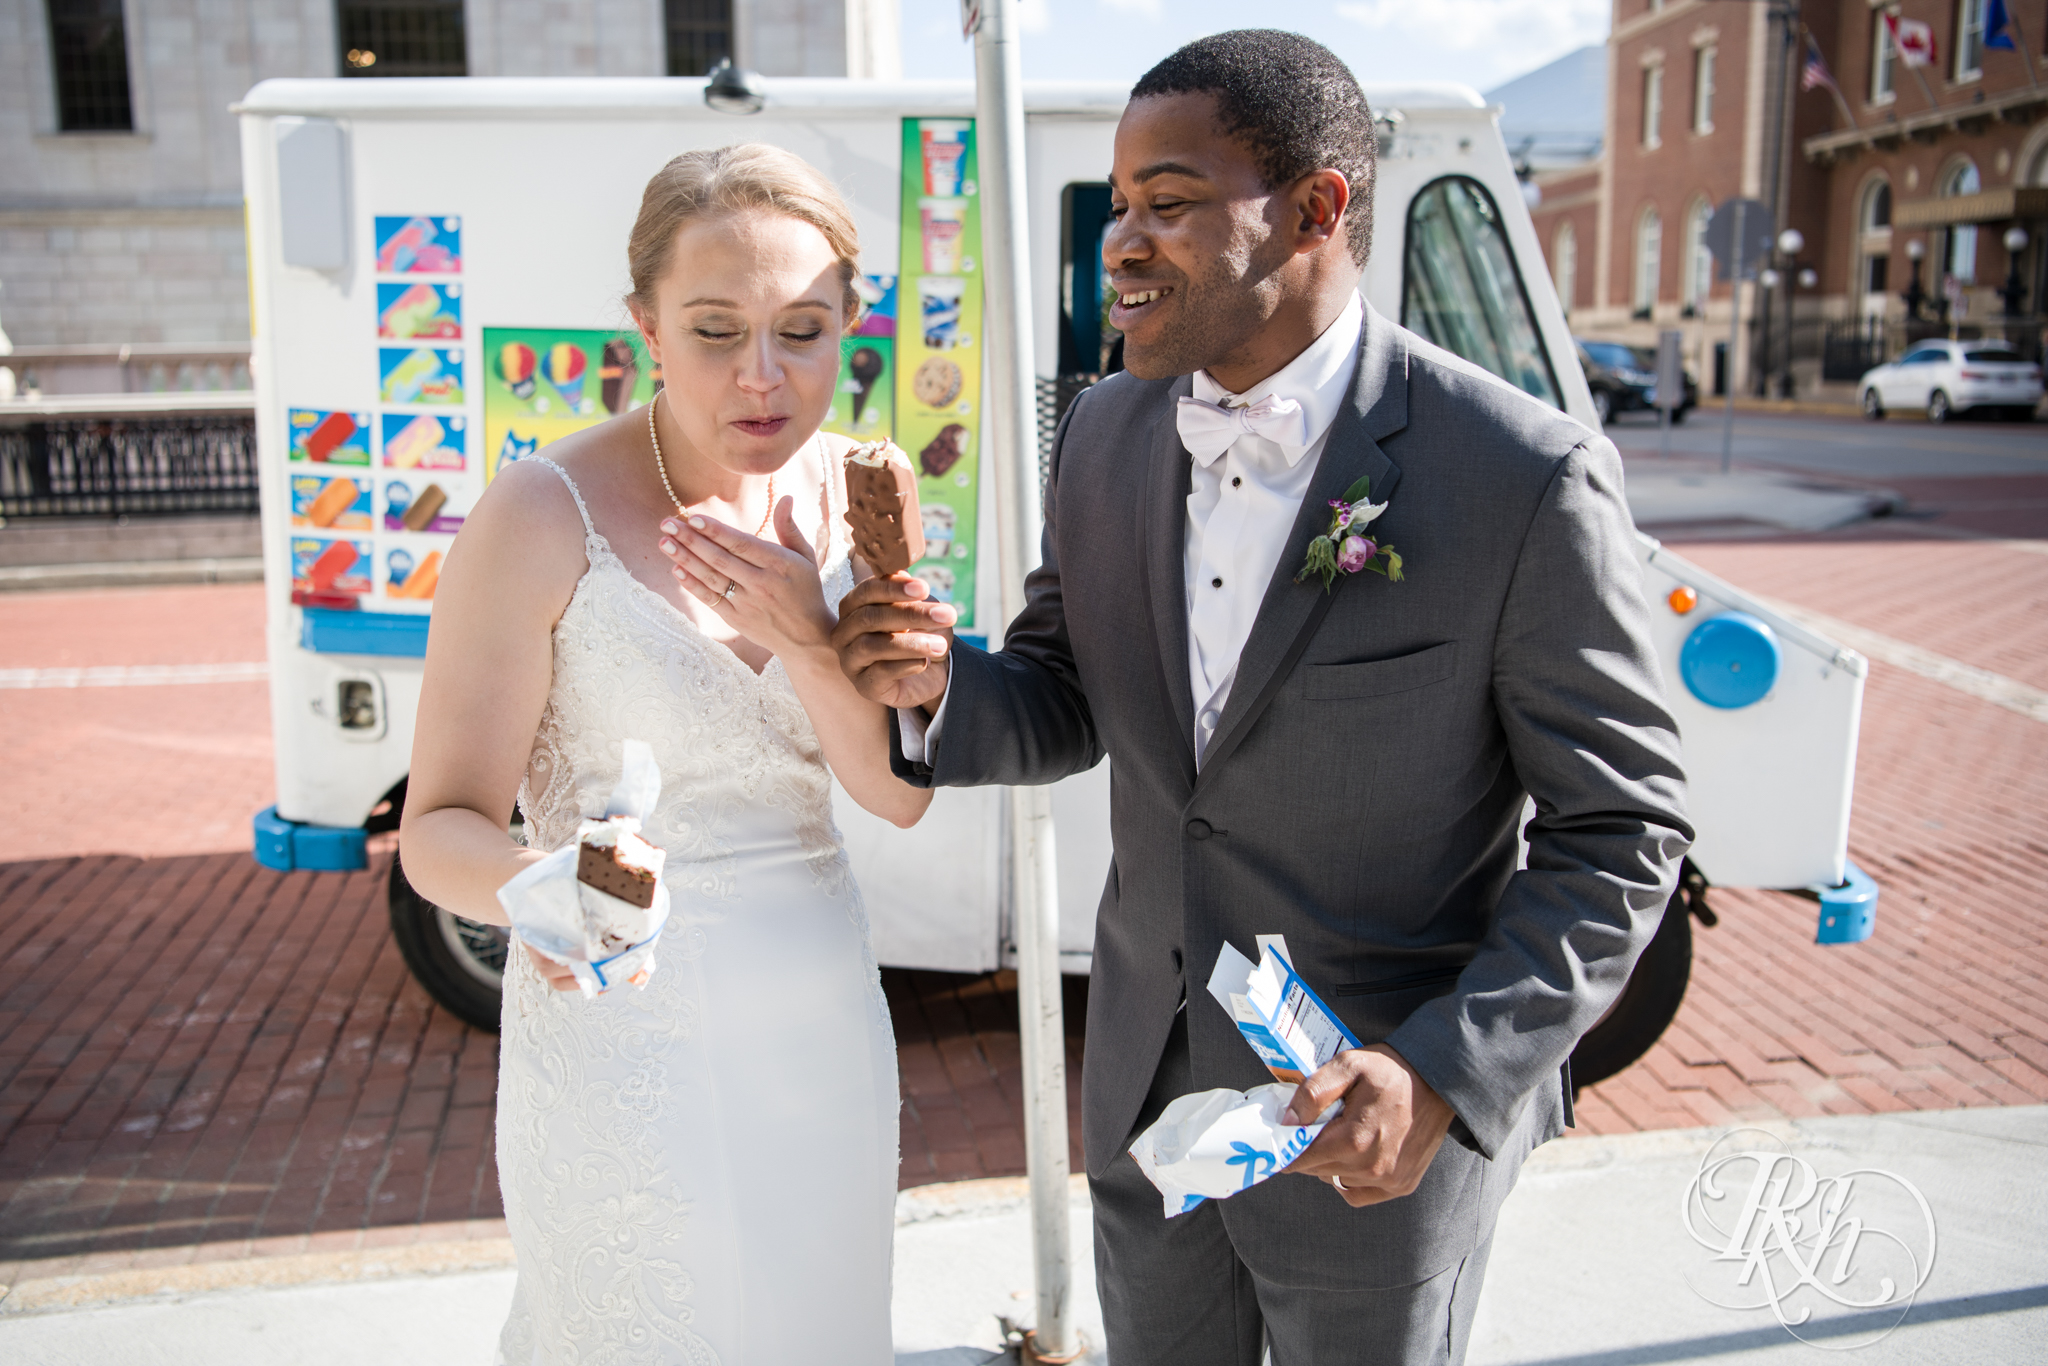 Black groom and white bride buy ice cream from ice cream truck in Saint Paul, Minnesota.